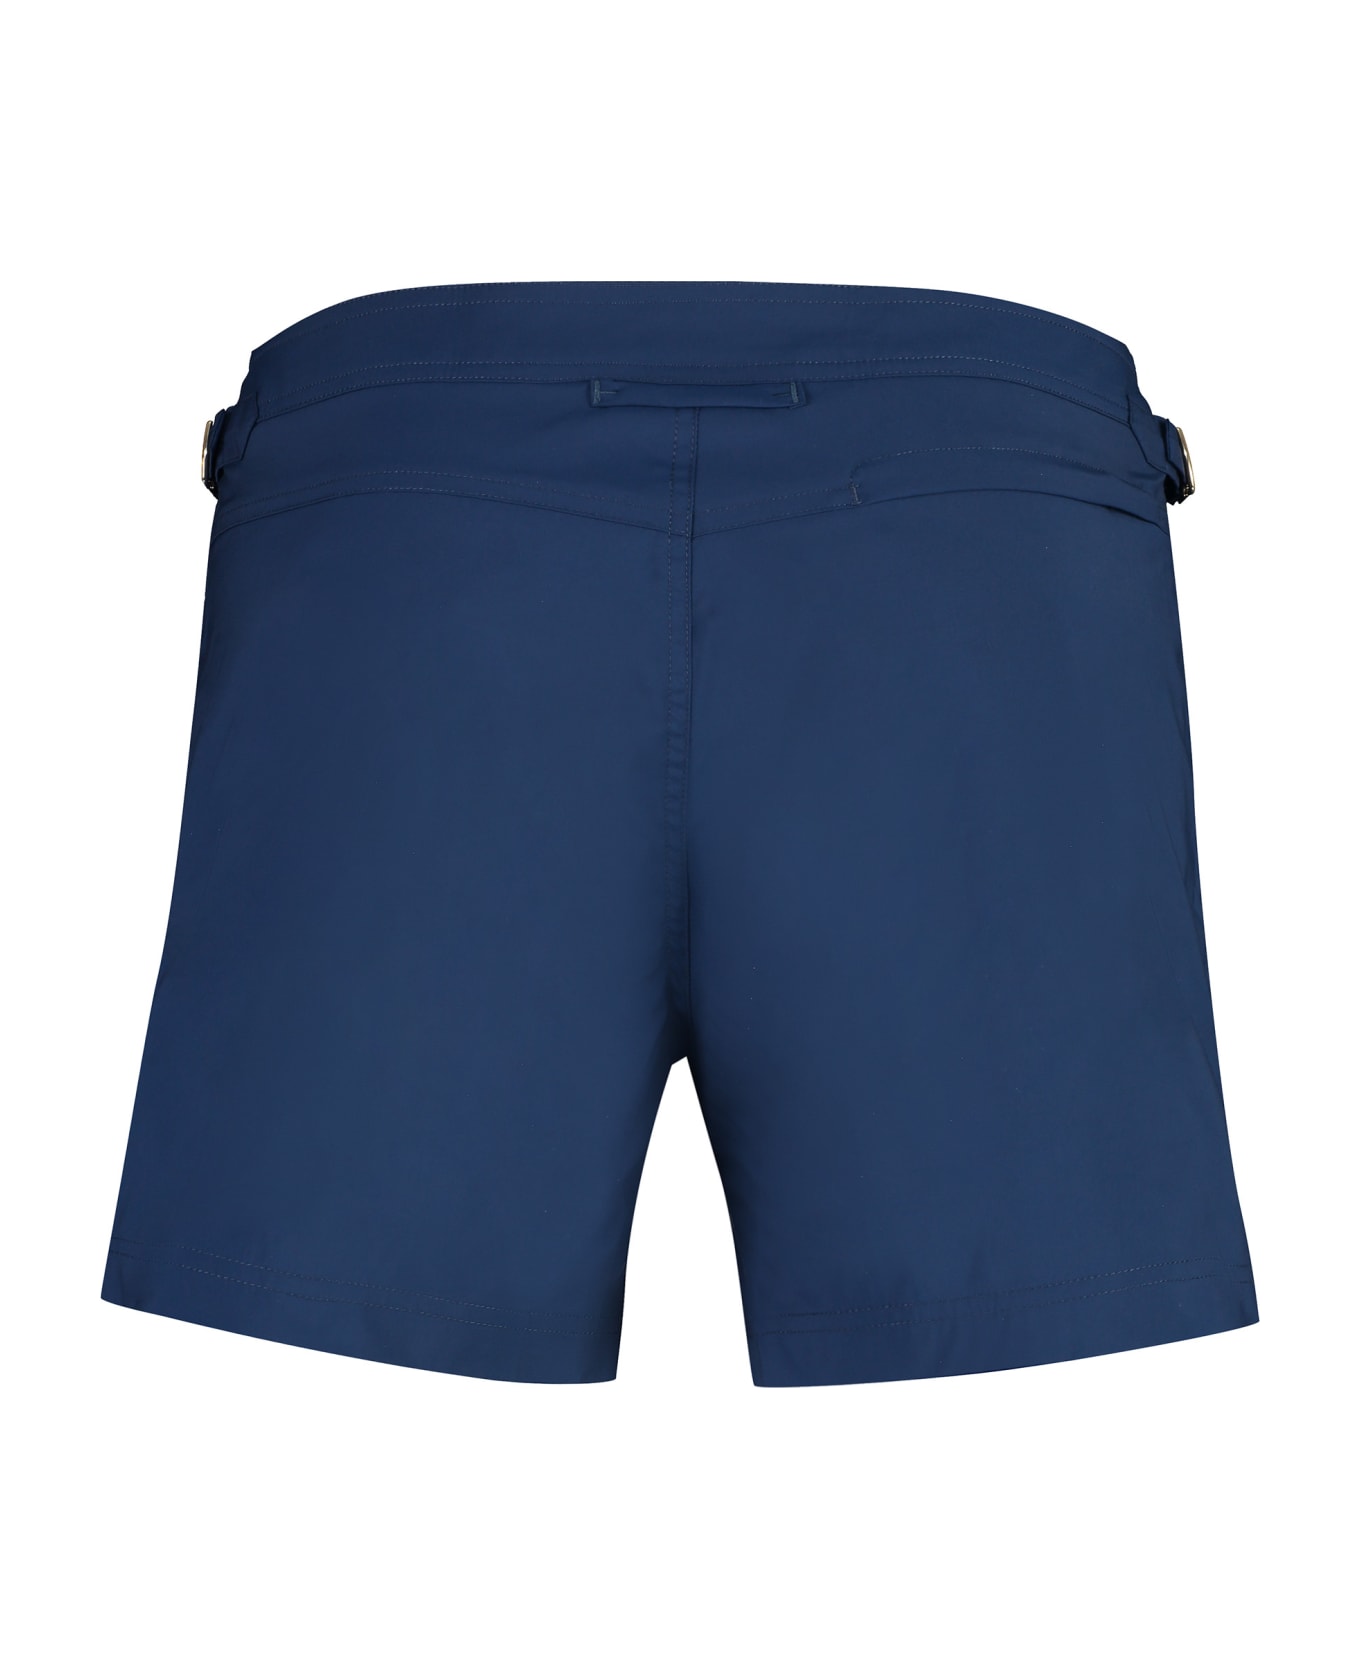 Tom Ford Nylon Swim Shorts - blue スイムトランクス